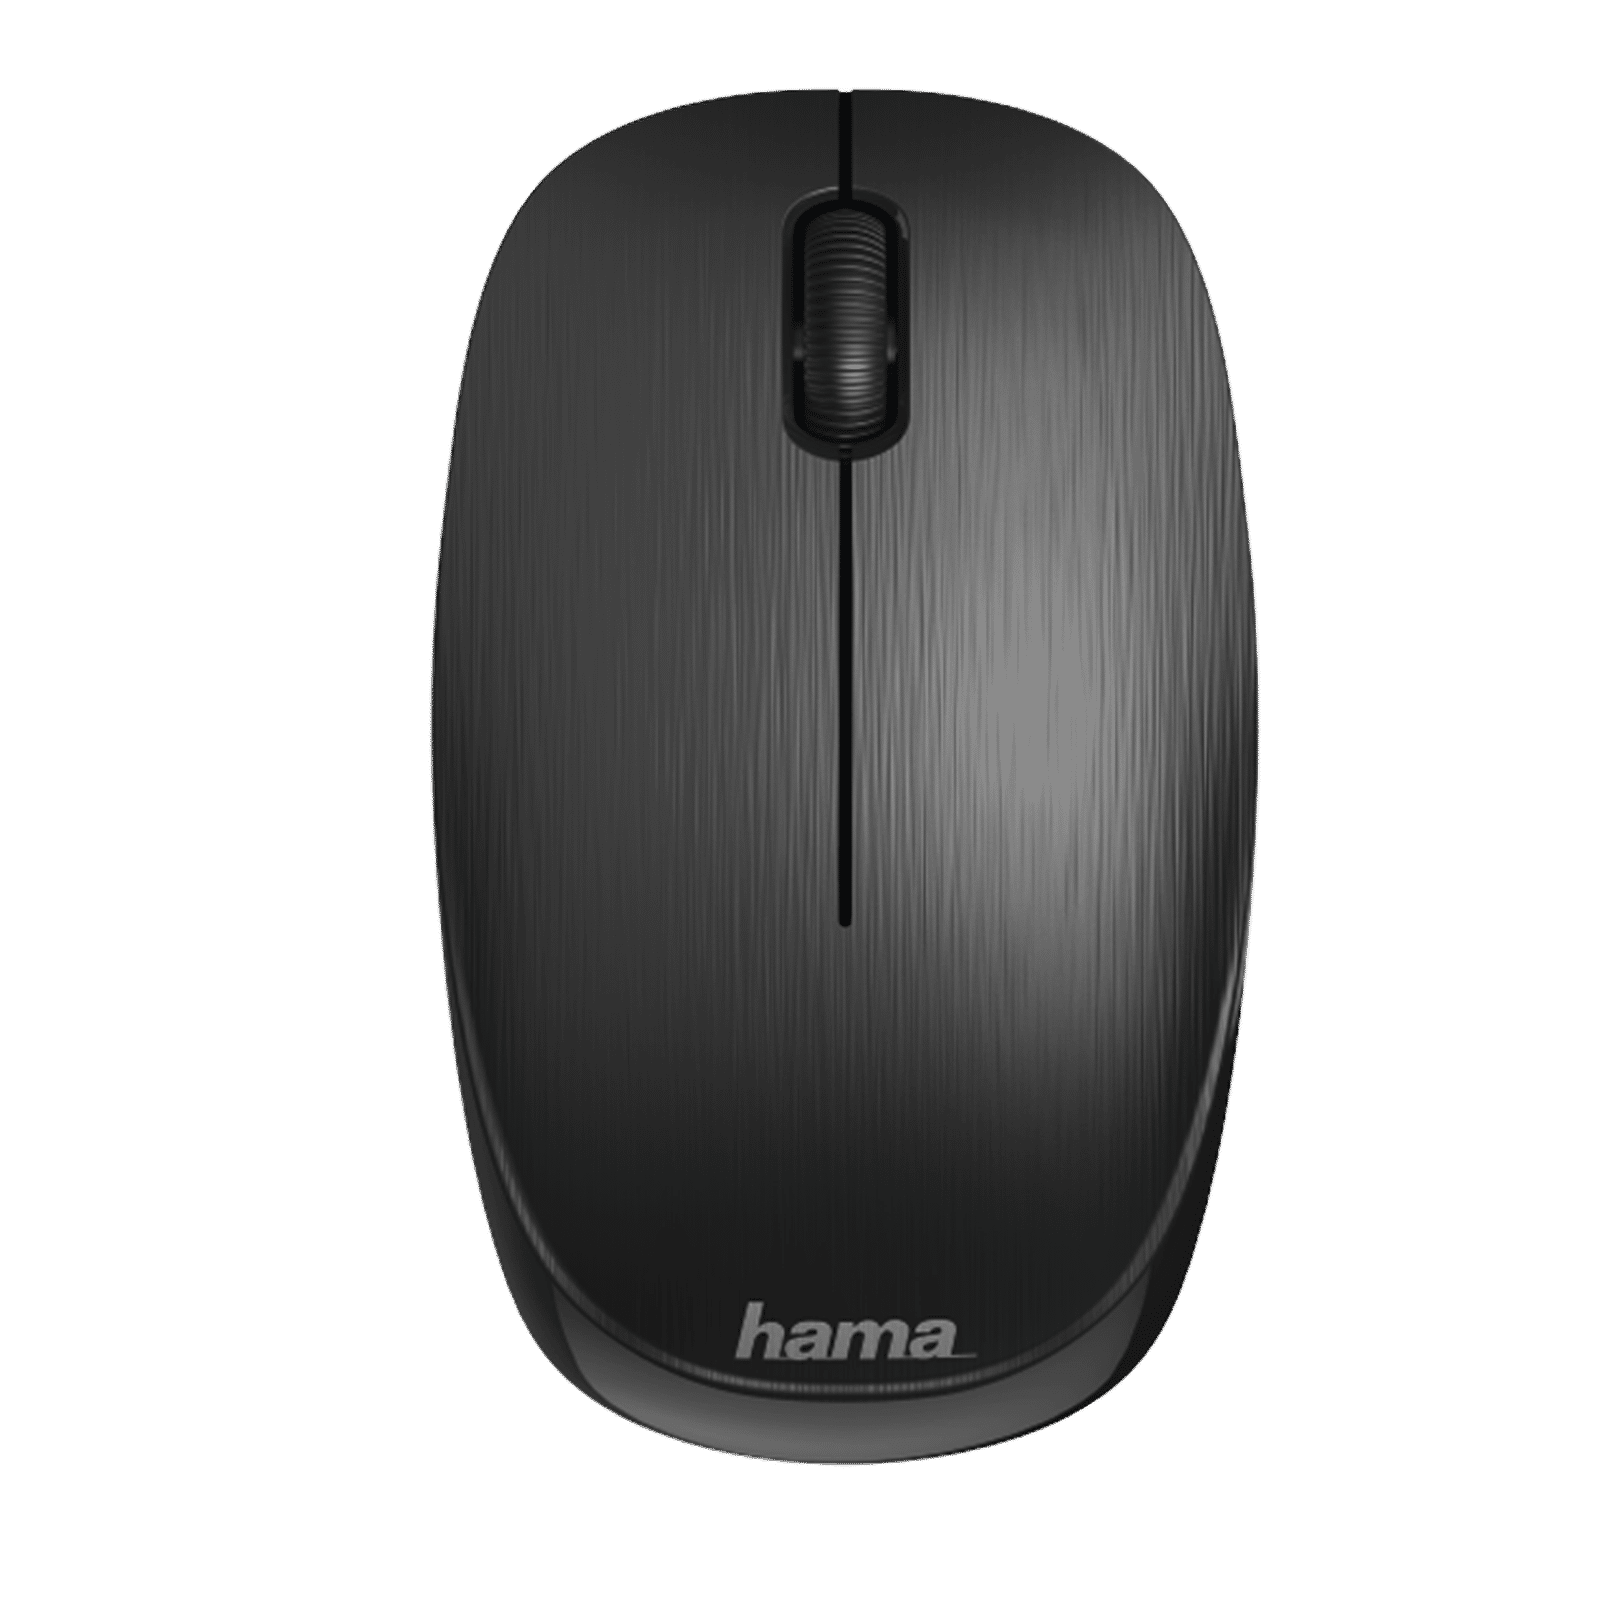 hama MC-110 Wireless Optical Mouse (1000 DPI, Super-Precise, Black)